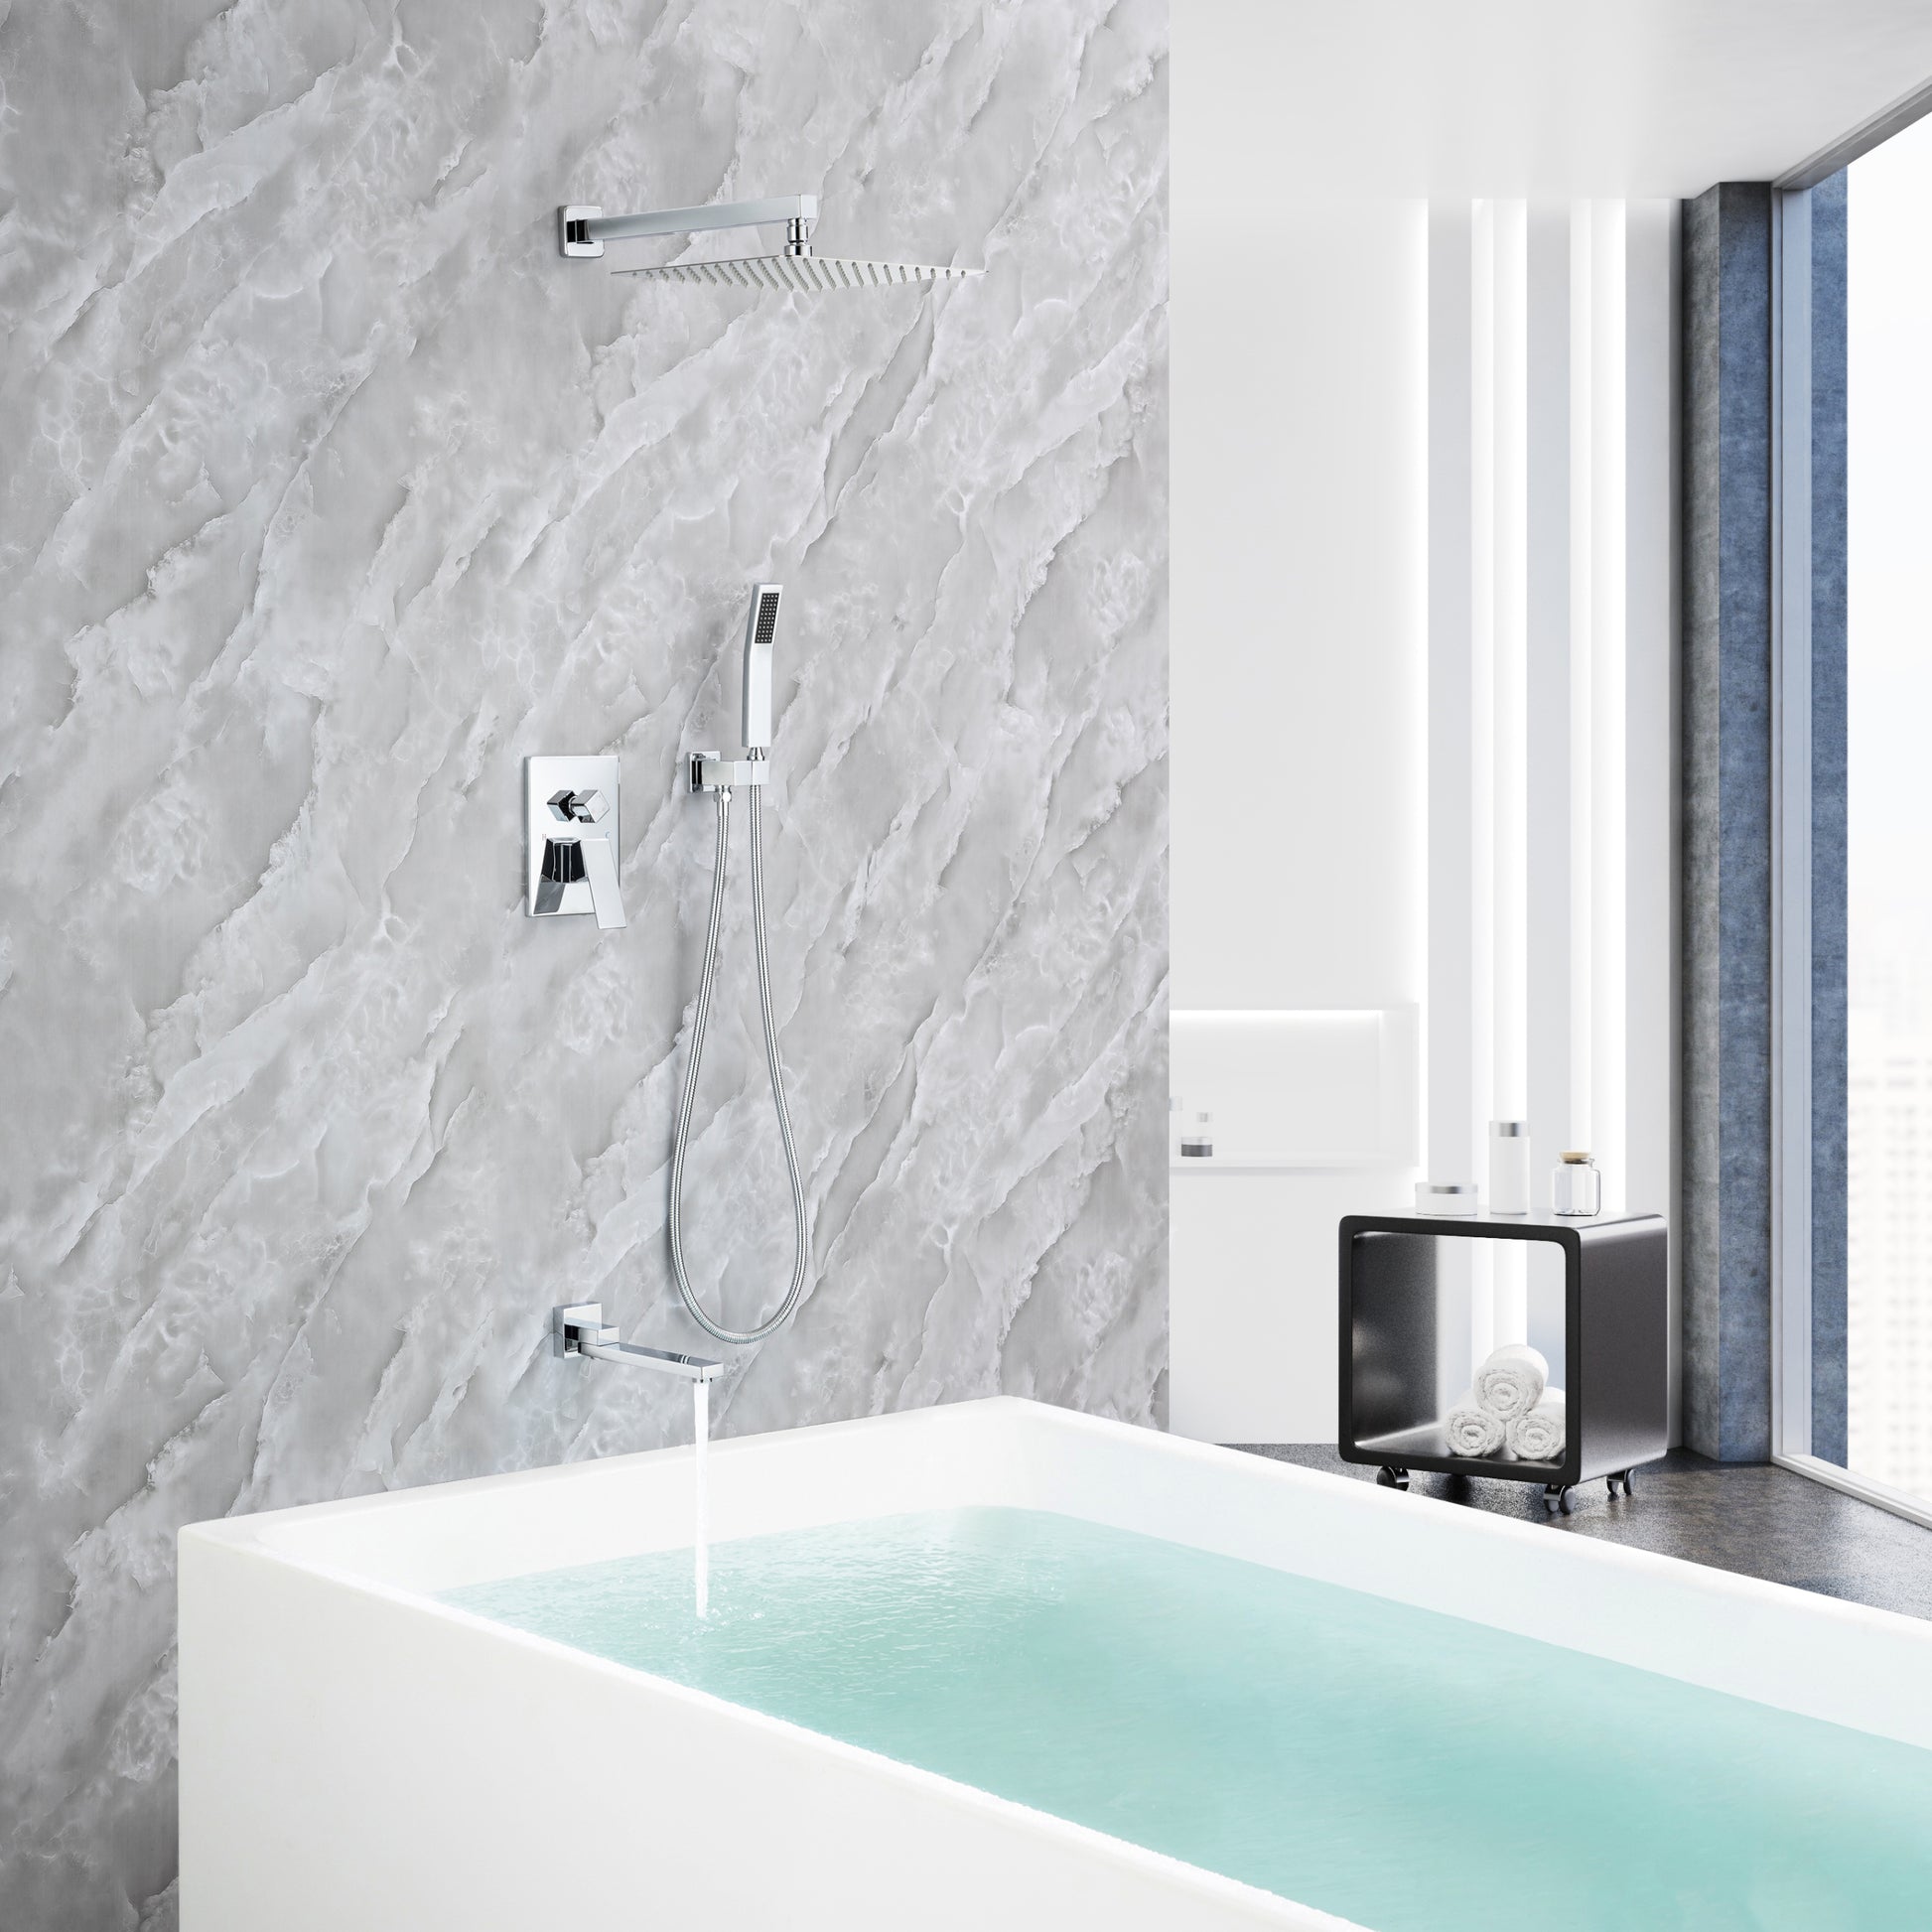 Rainfall 10 inch Shower System Bathroom Luxury Rain chrome-brass